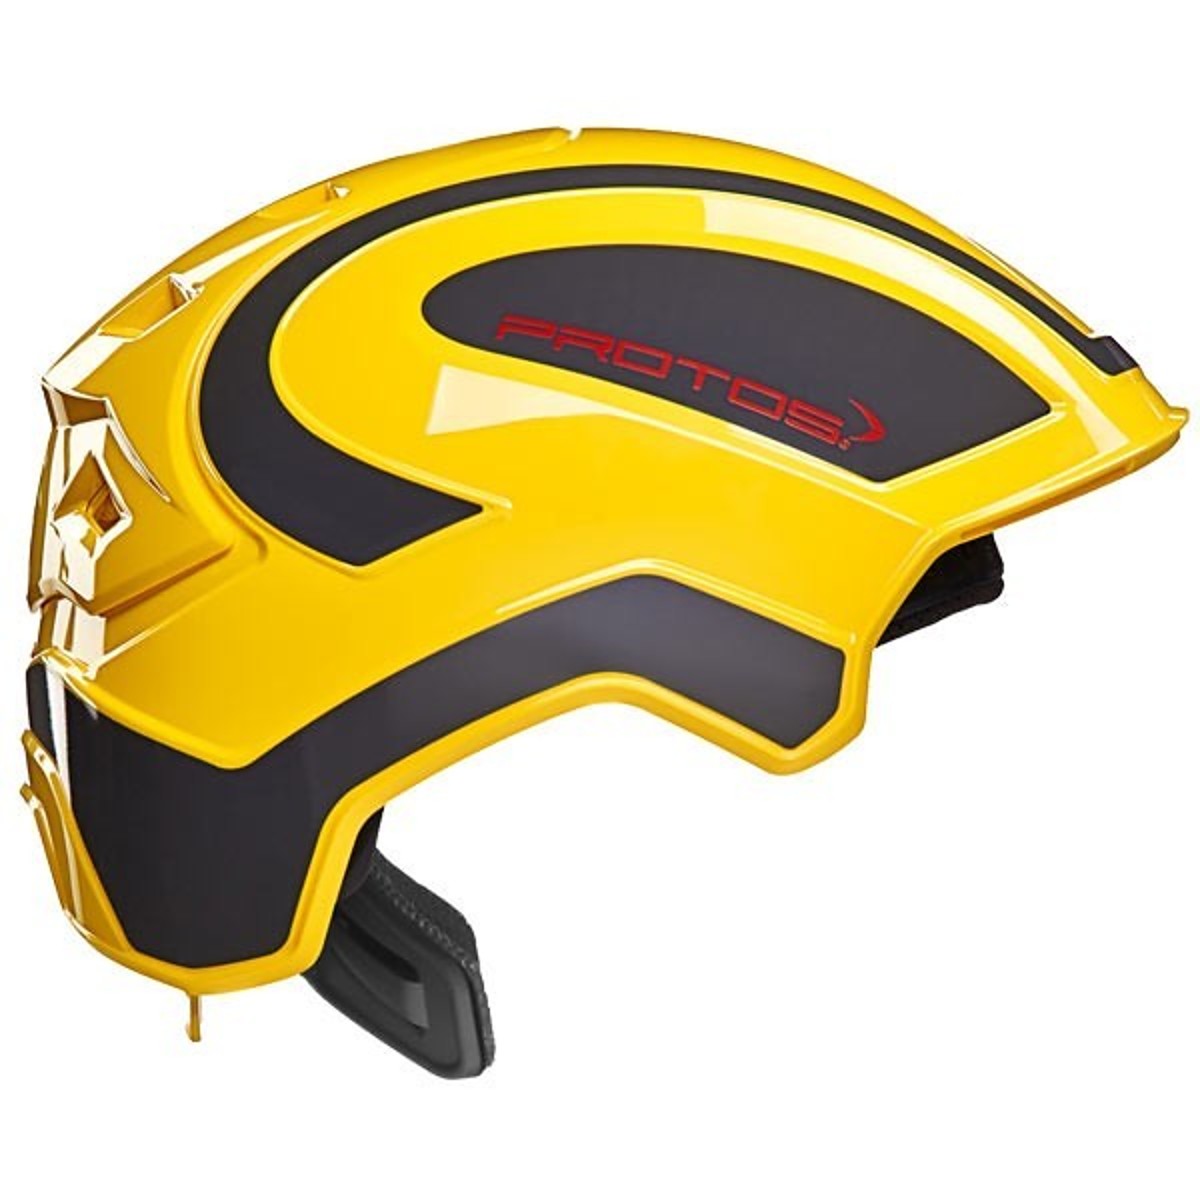 Protos Helm maximaler Schutz